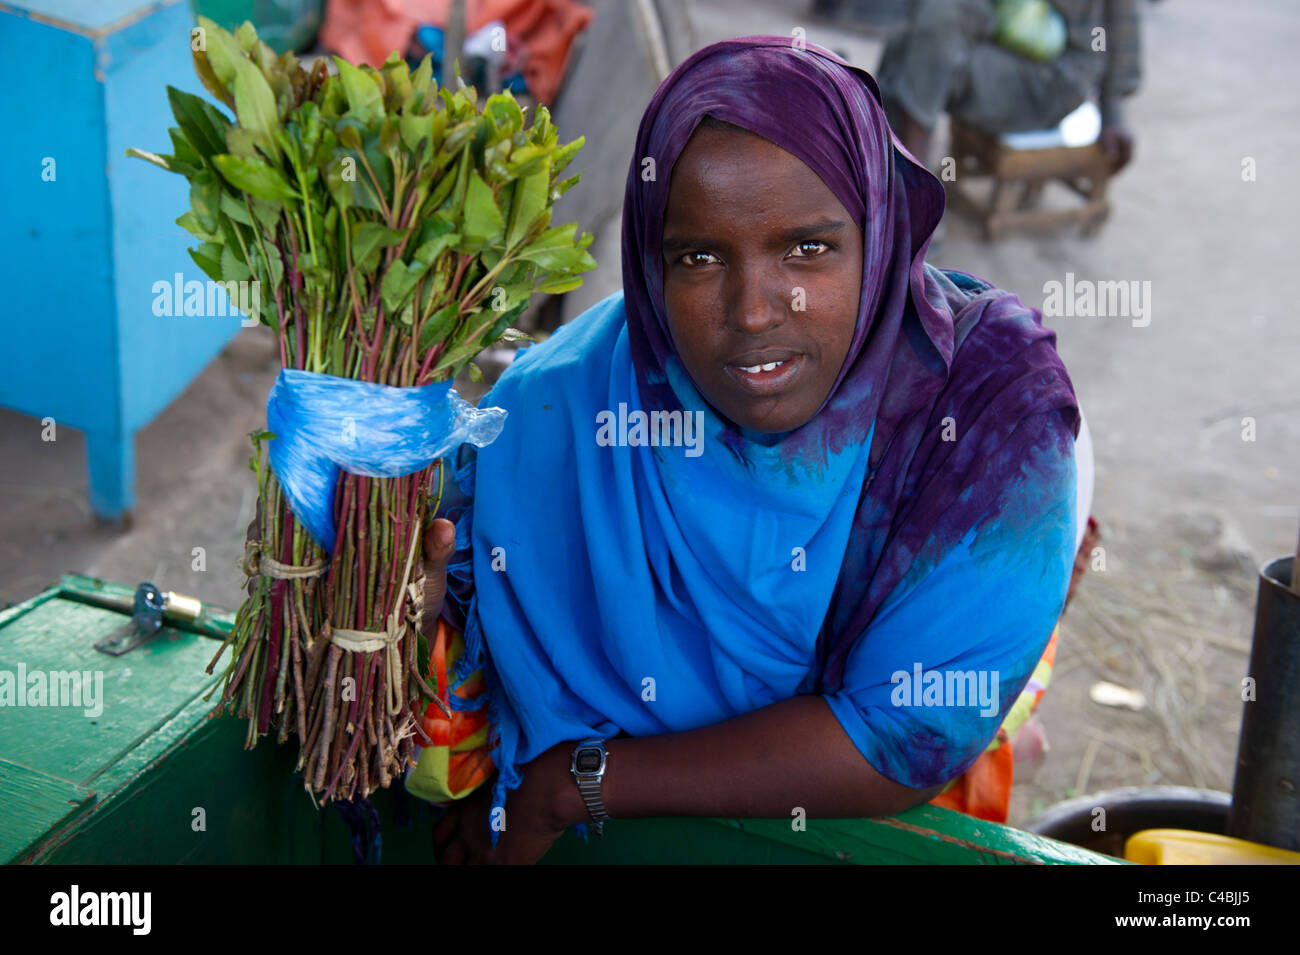 khat-for-sale-in-the-market-hargeisa-somaliland-somalia-C4BJJ5.jpg